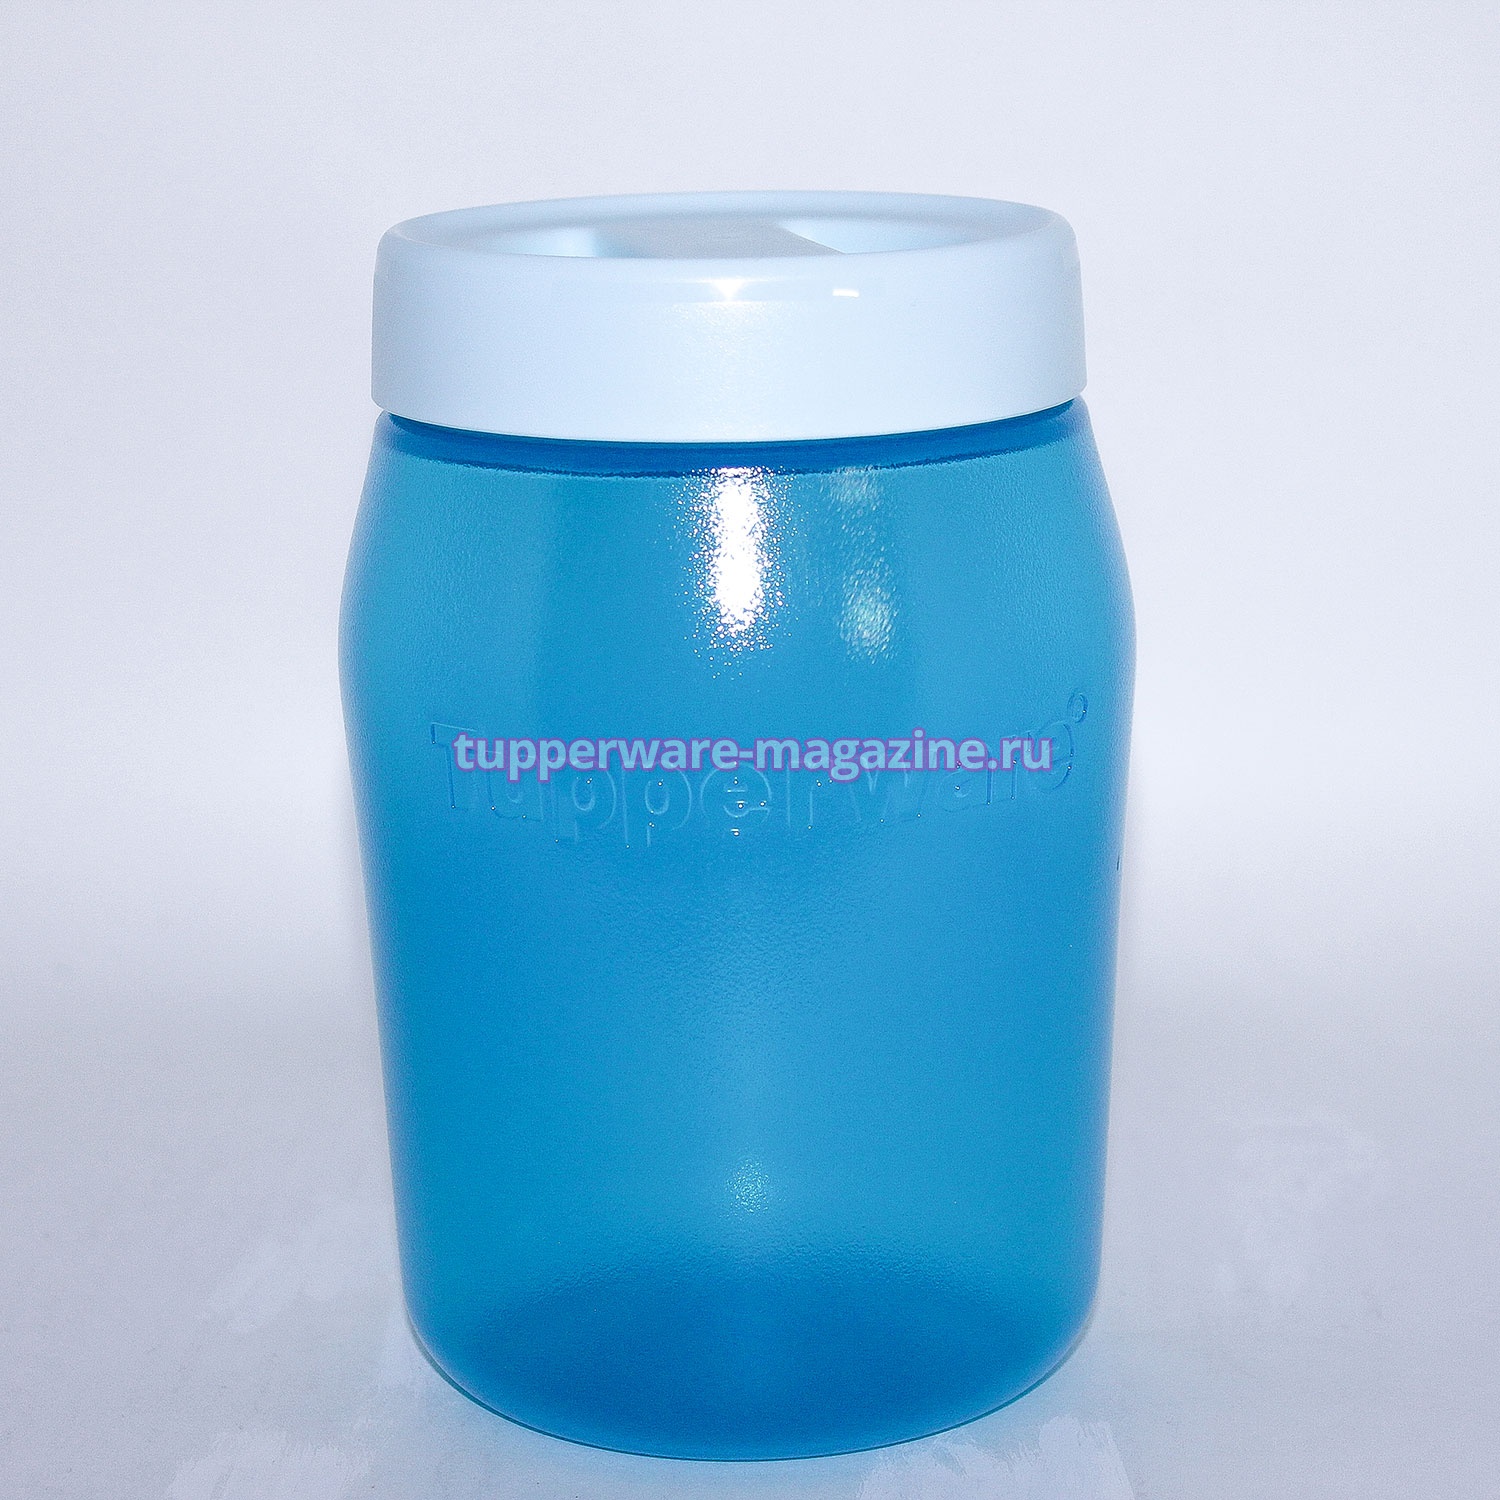 Чудо-банка Tupperware 1,5 л в голубом цвете